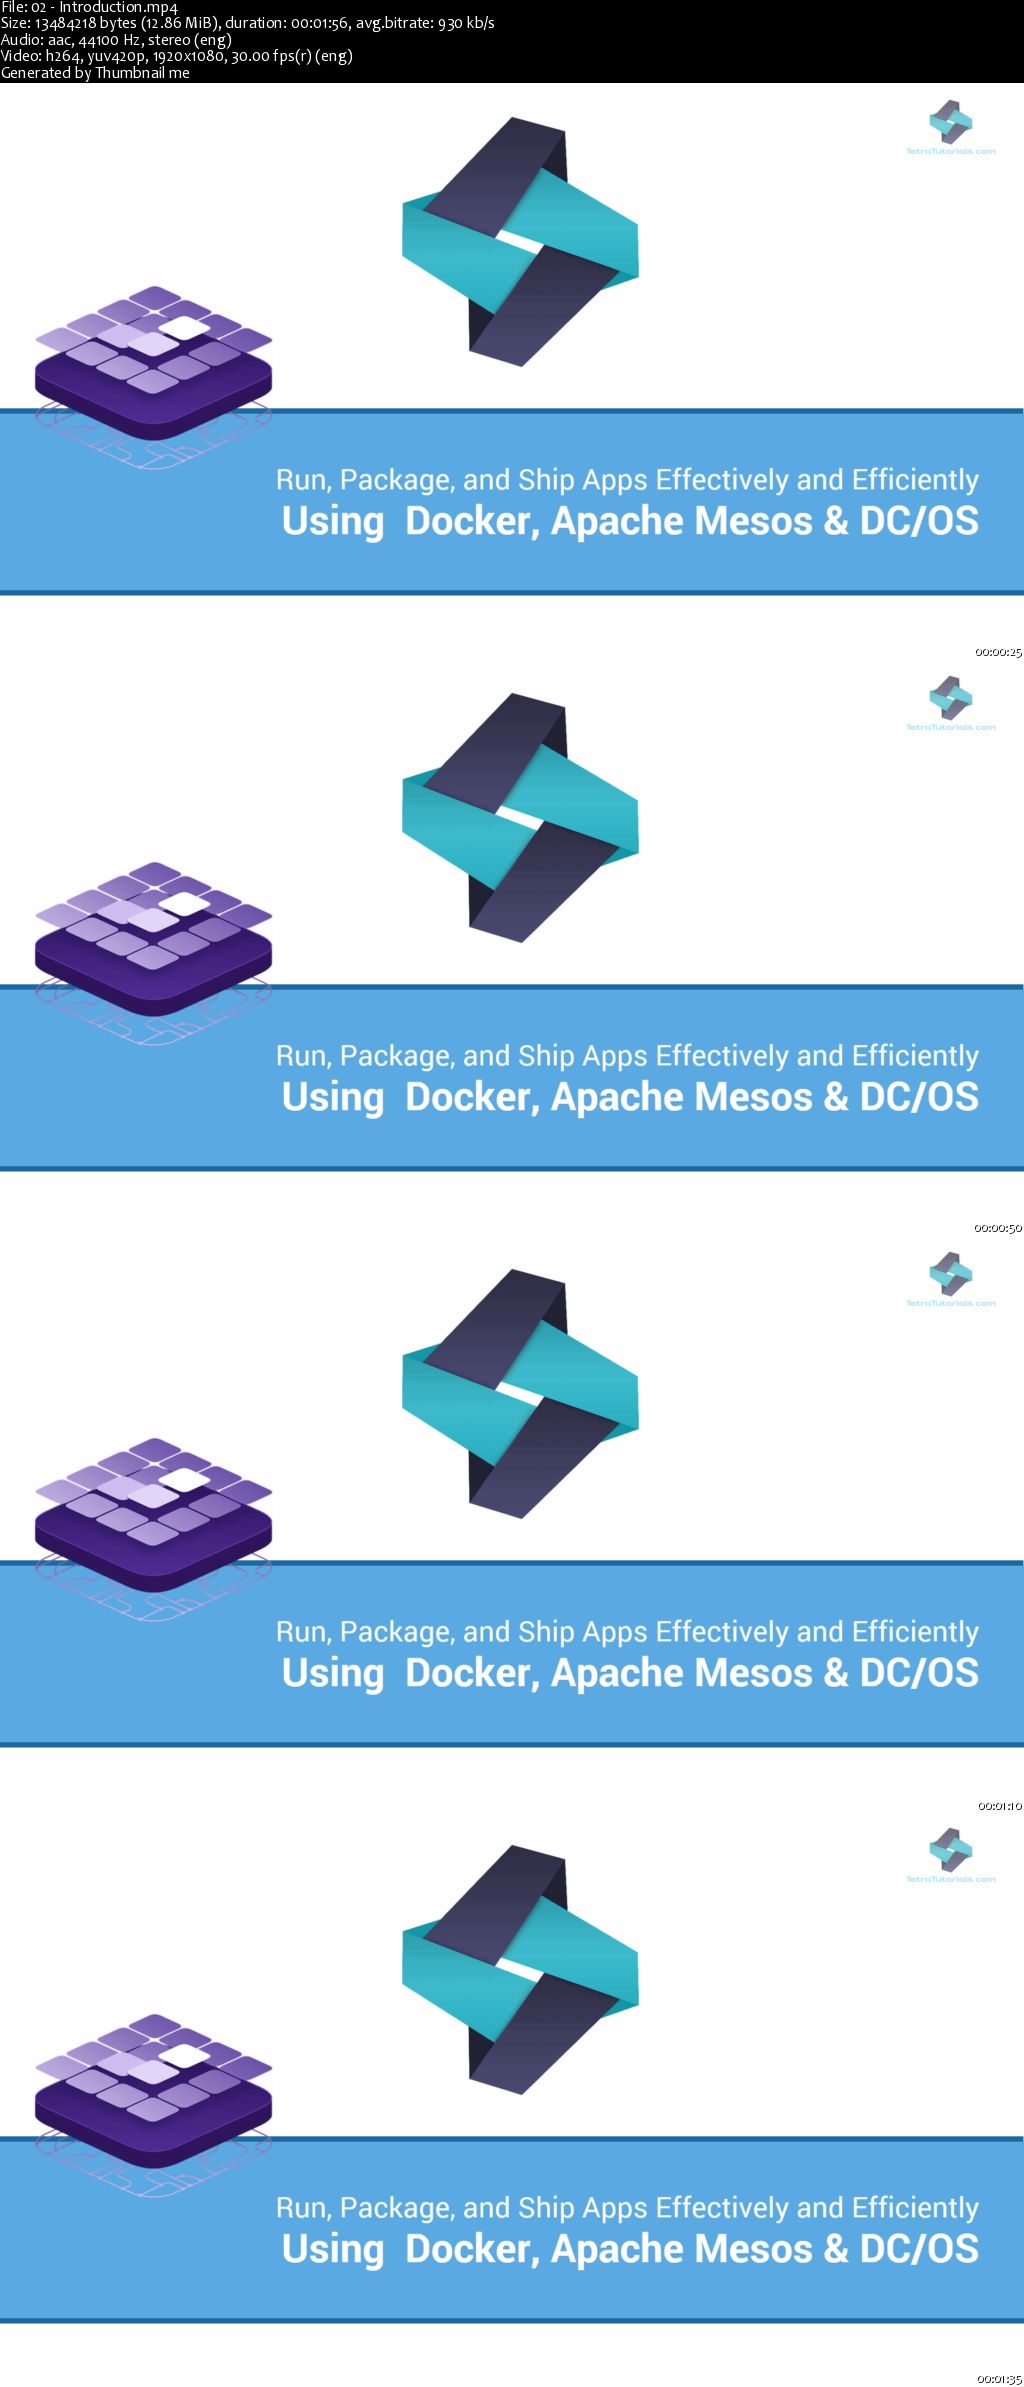 Docker, Apache Mesos & DCOS: Run and manage you own IaaS cloud datacenter